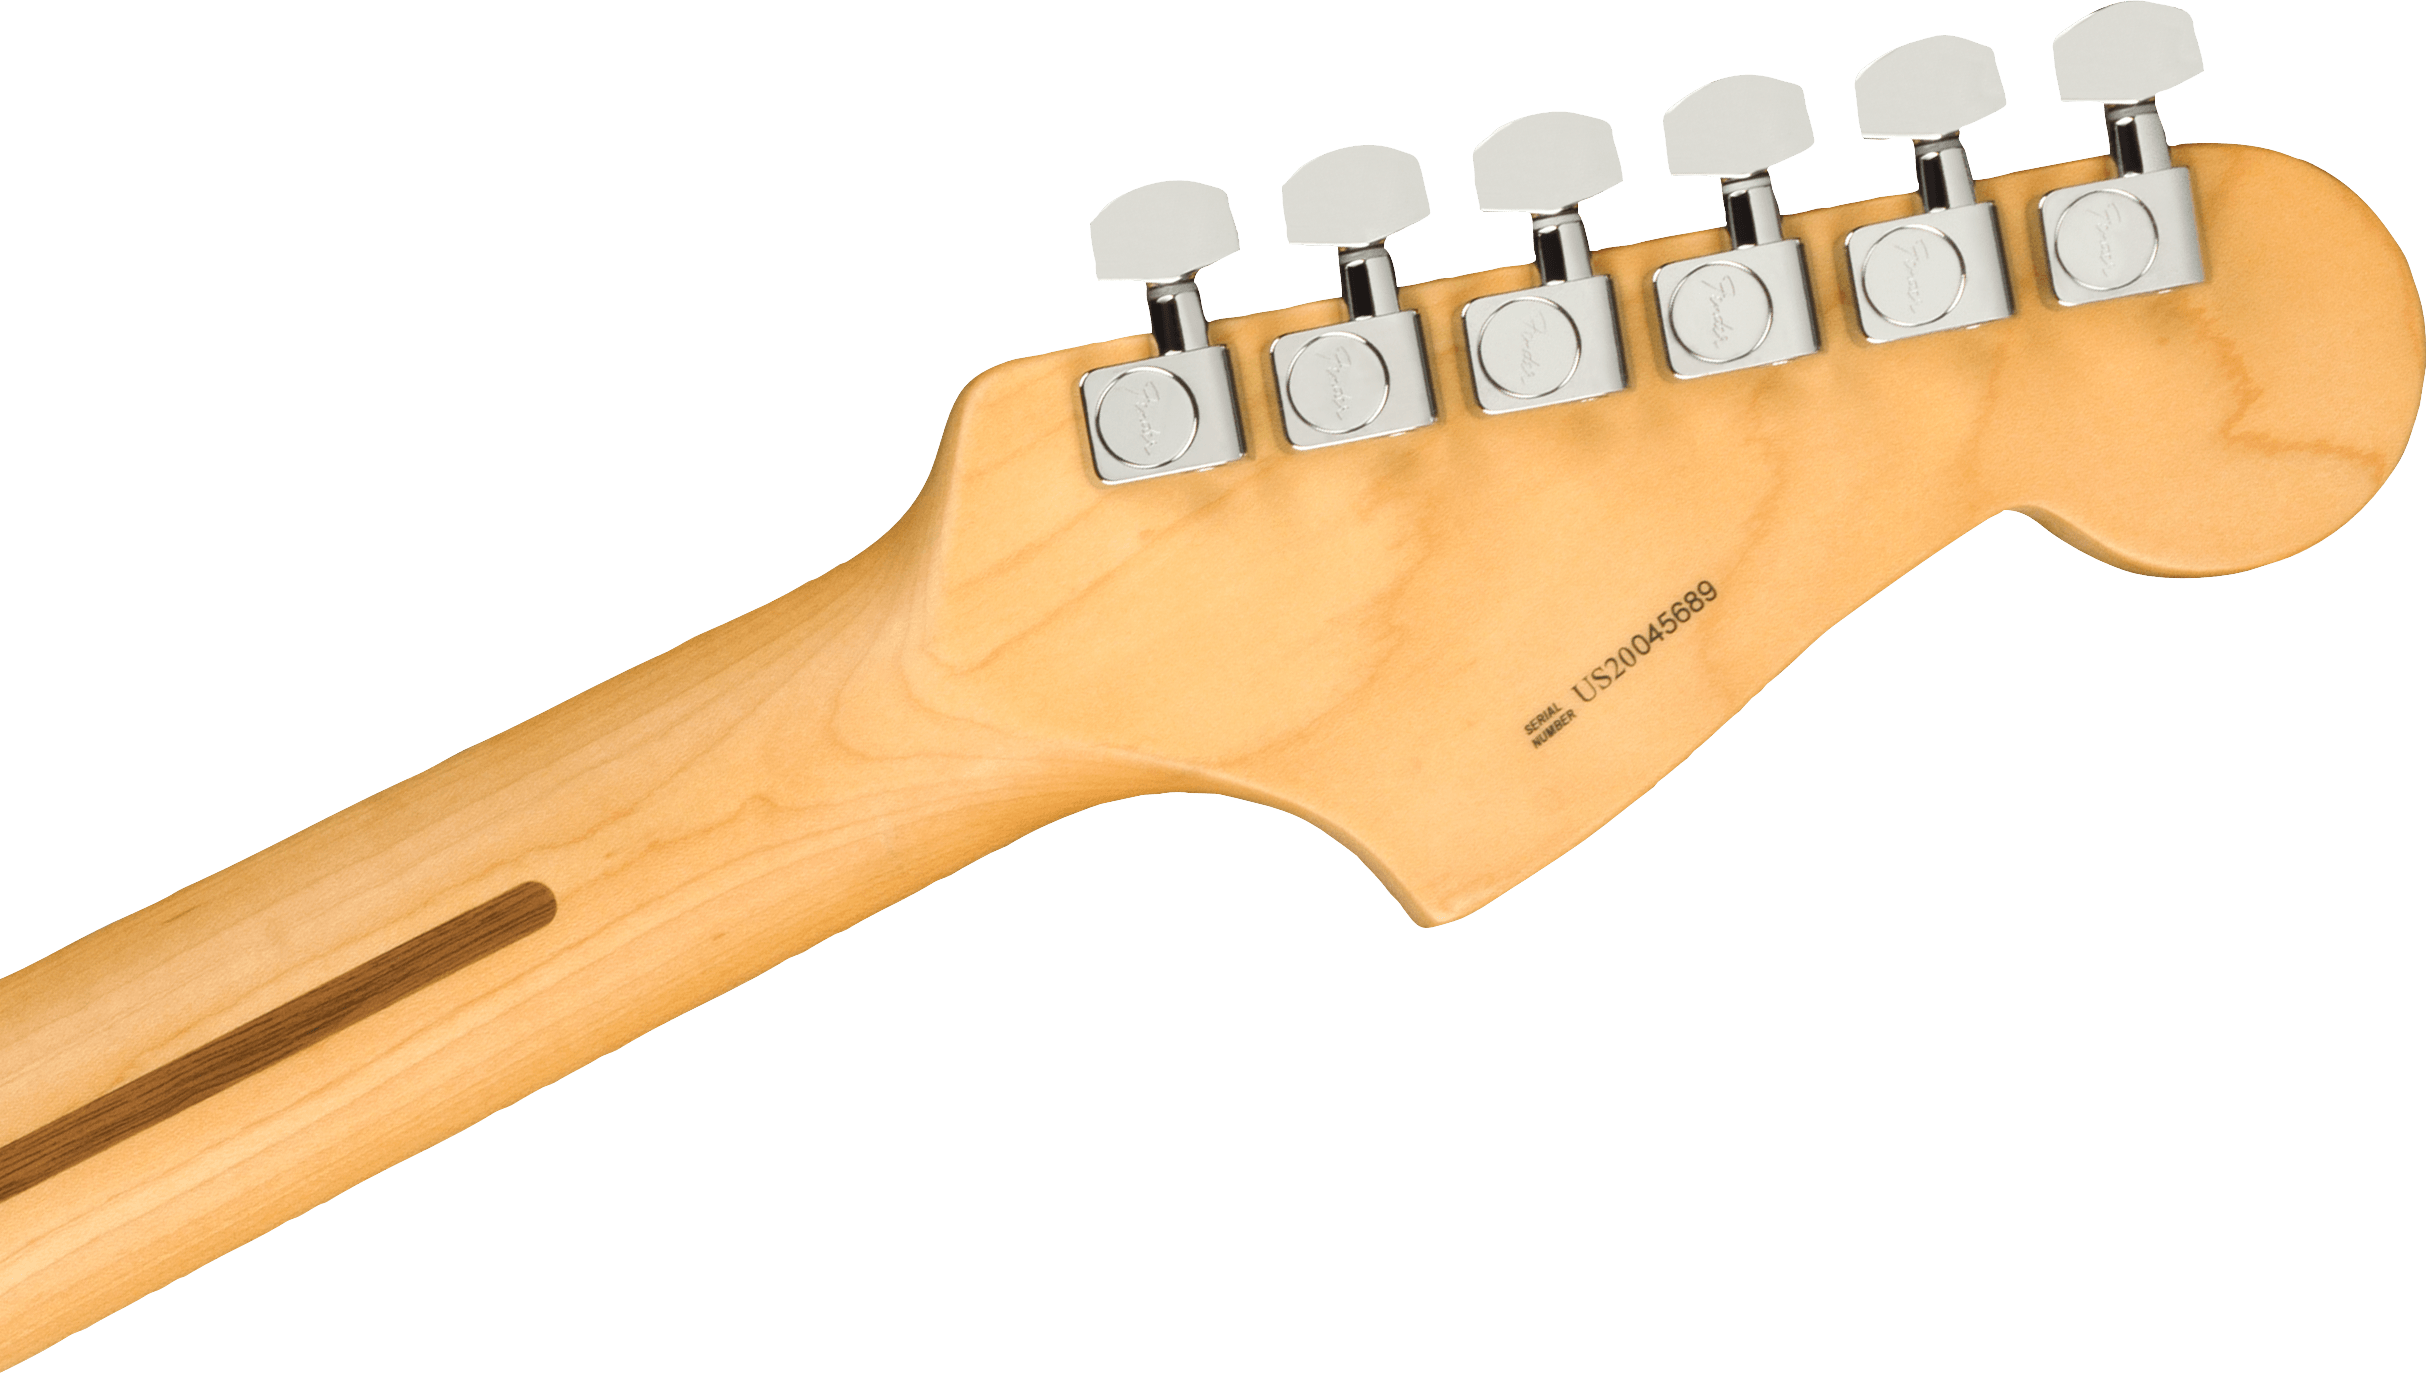 Fender American Professional II Jazzmaster® Left-Hand, Rosewood Fingerboard, 3-Color Sunburst